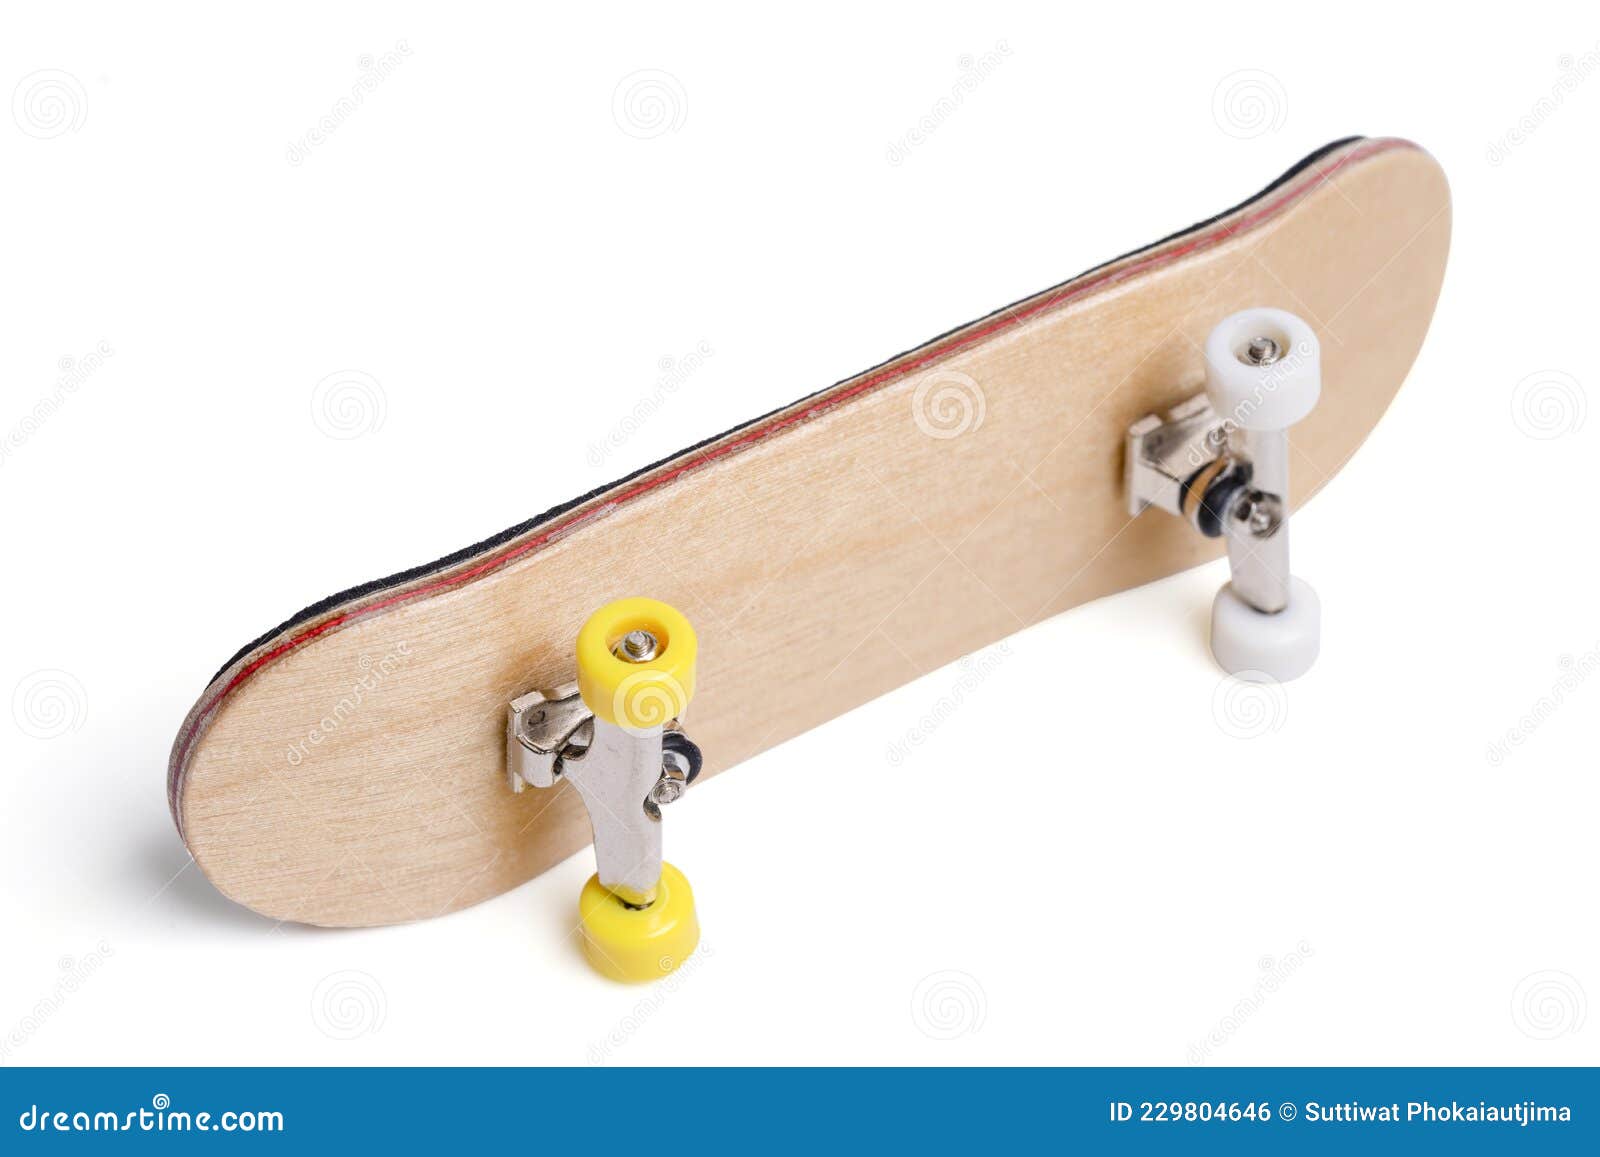 Skateboard with Wheels, Trucks on White Background Stock Photo - Image ...